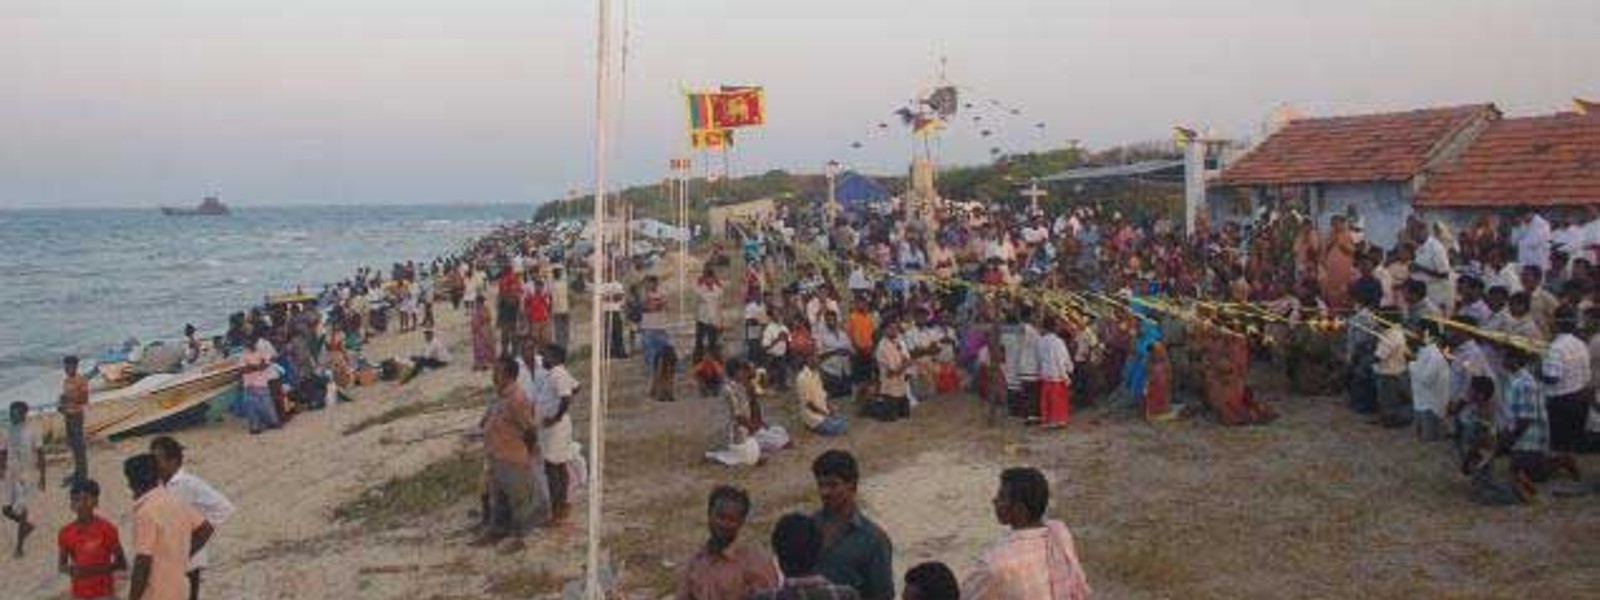 Katchatheevu festival open for Indian devotees